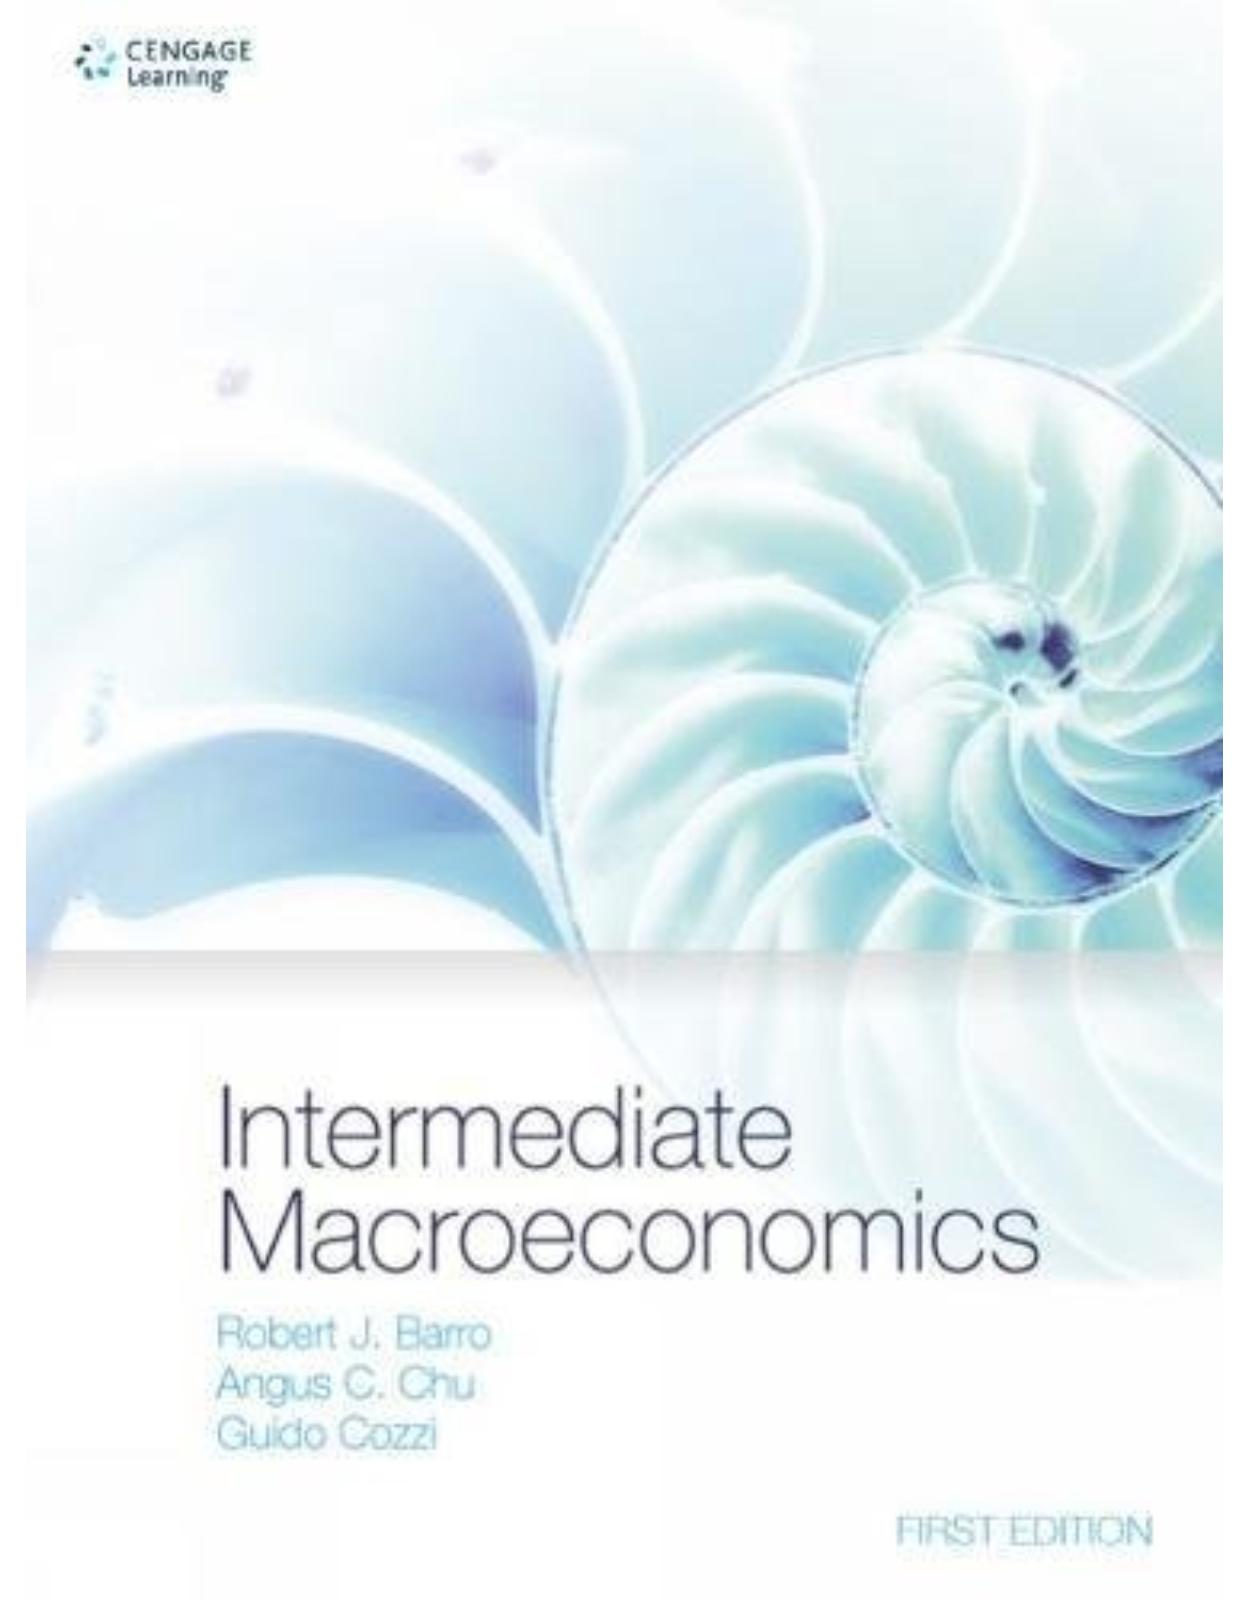 Intermediate Macroeconomics